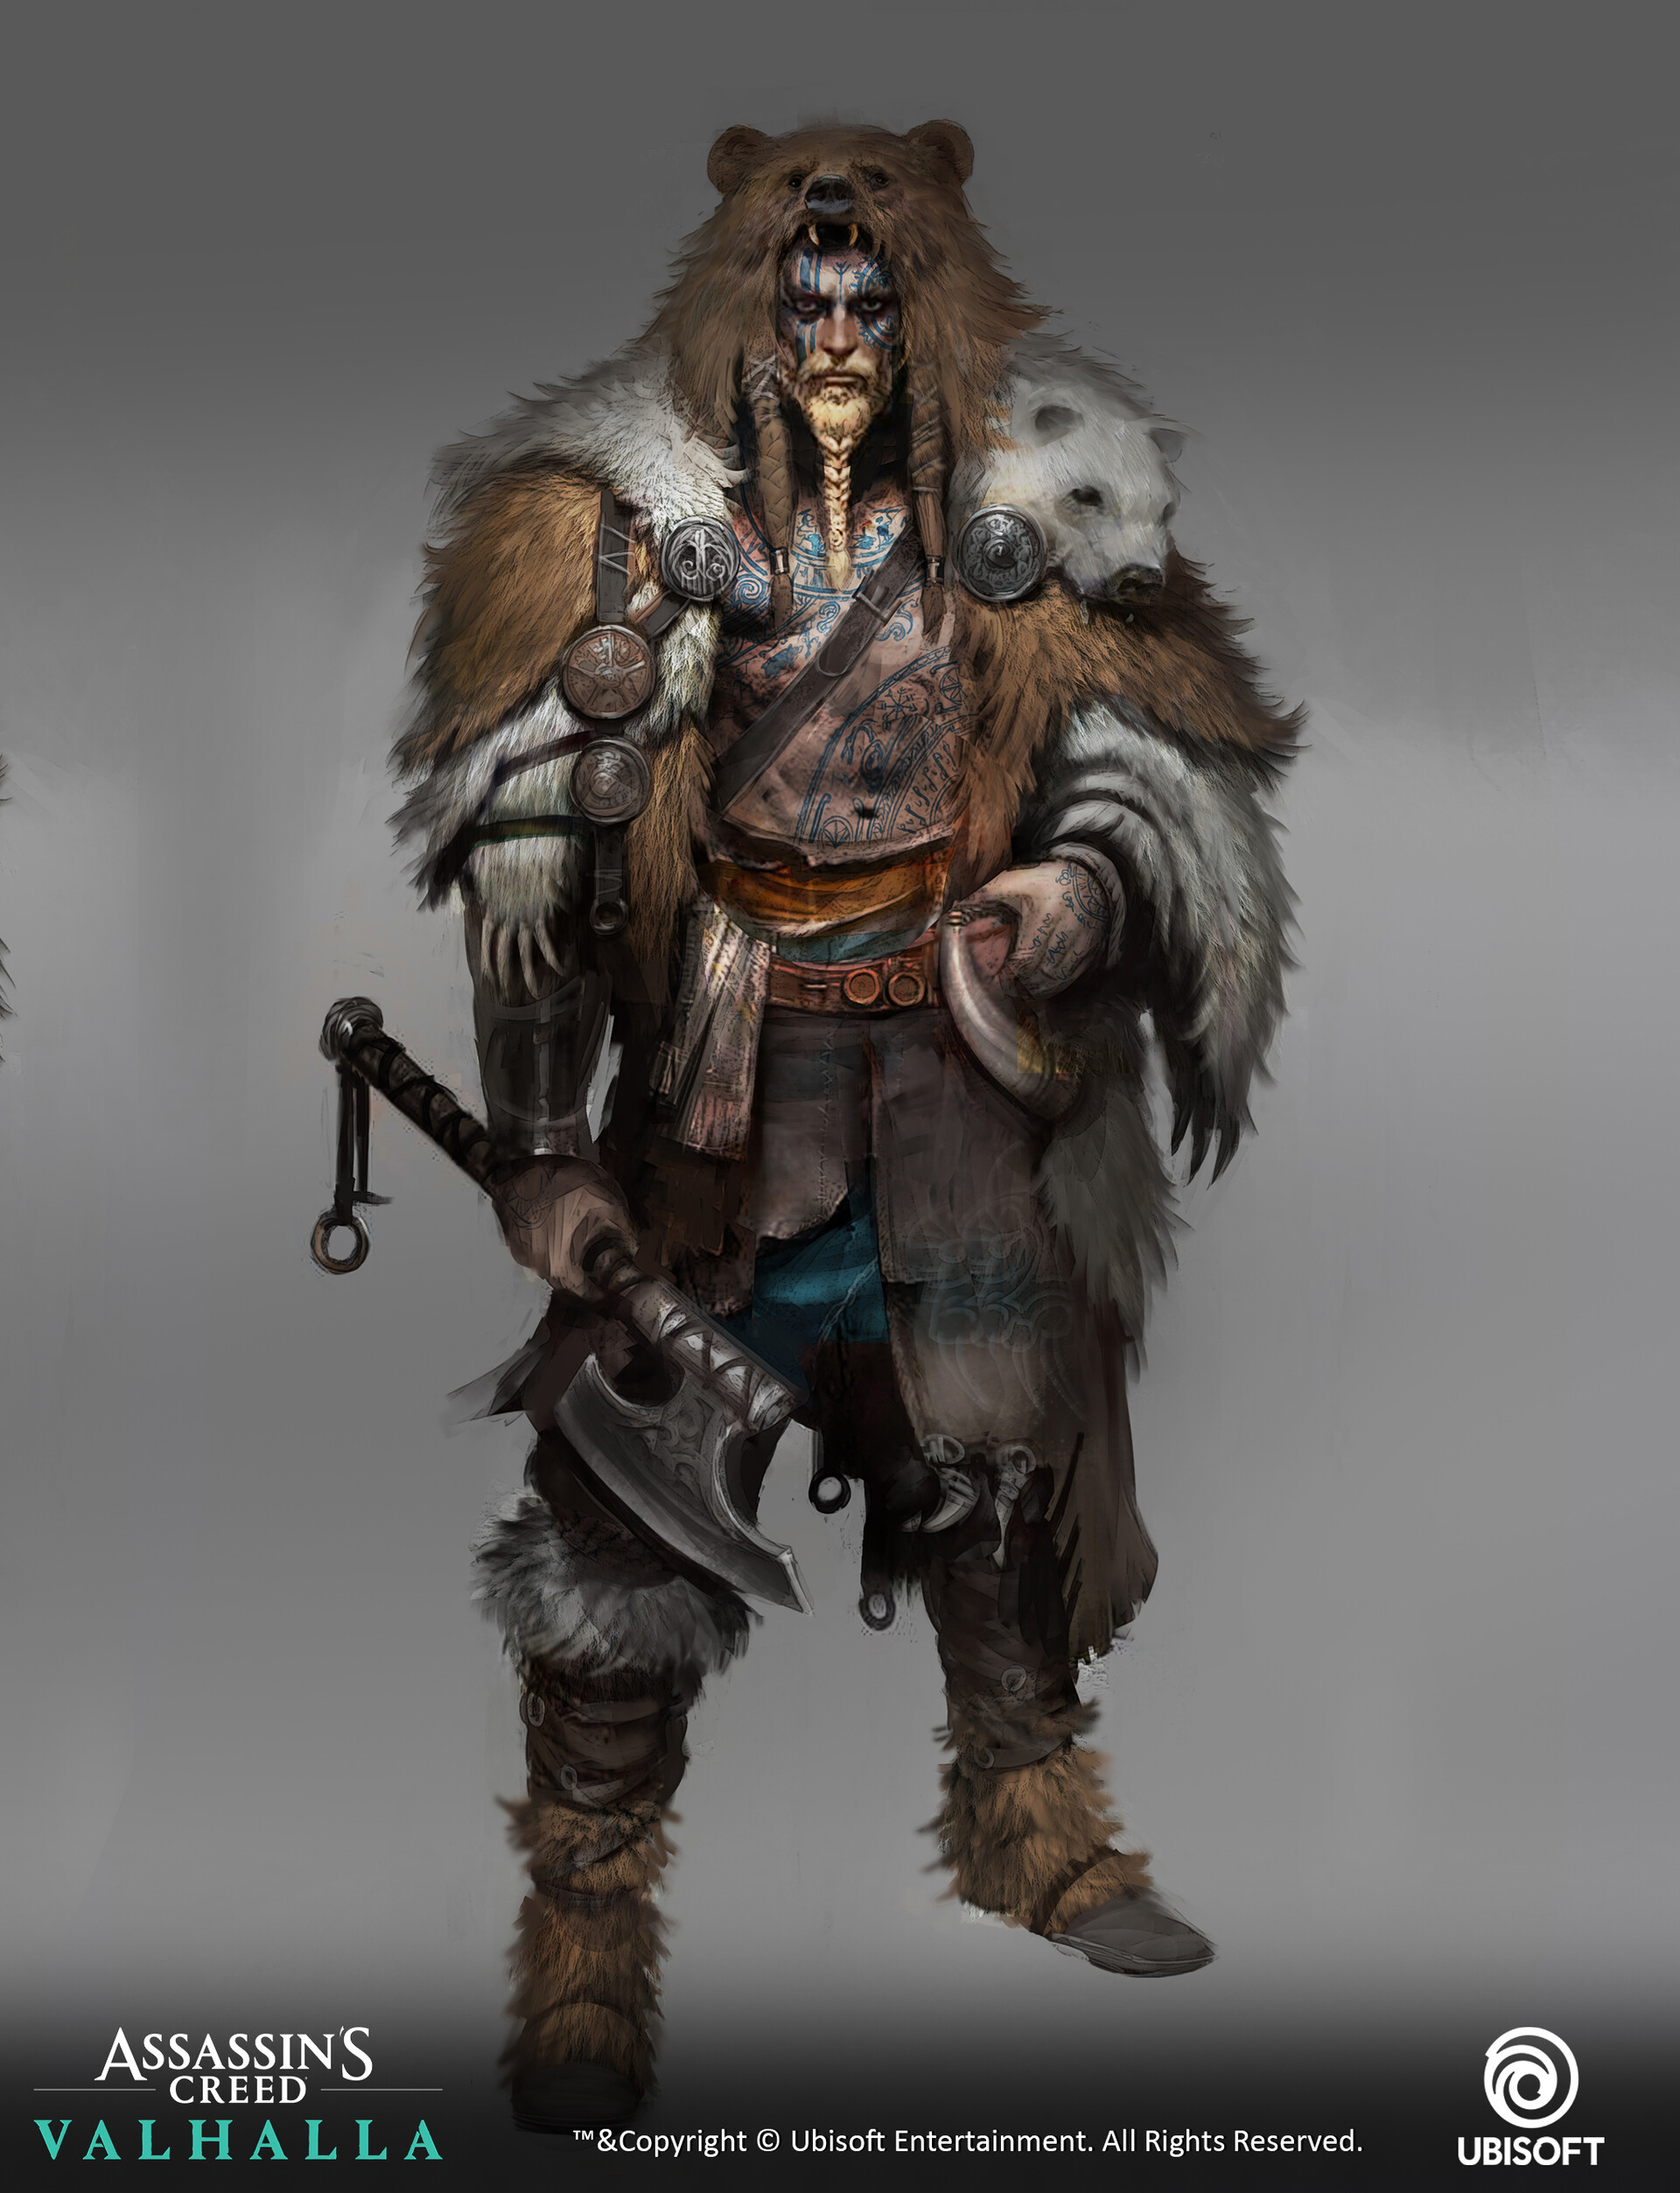 A viking/assassin outfit at last! (mods) : r/AssassinsCreedValhala